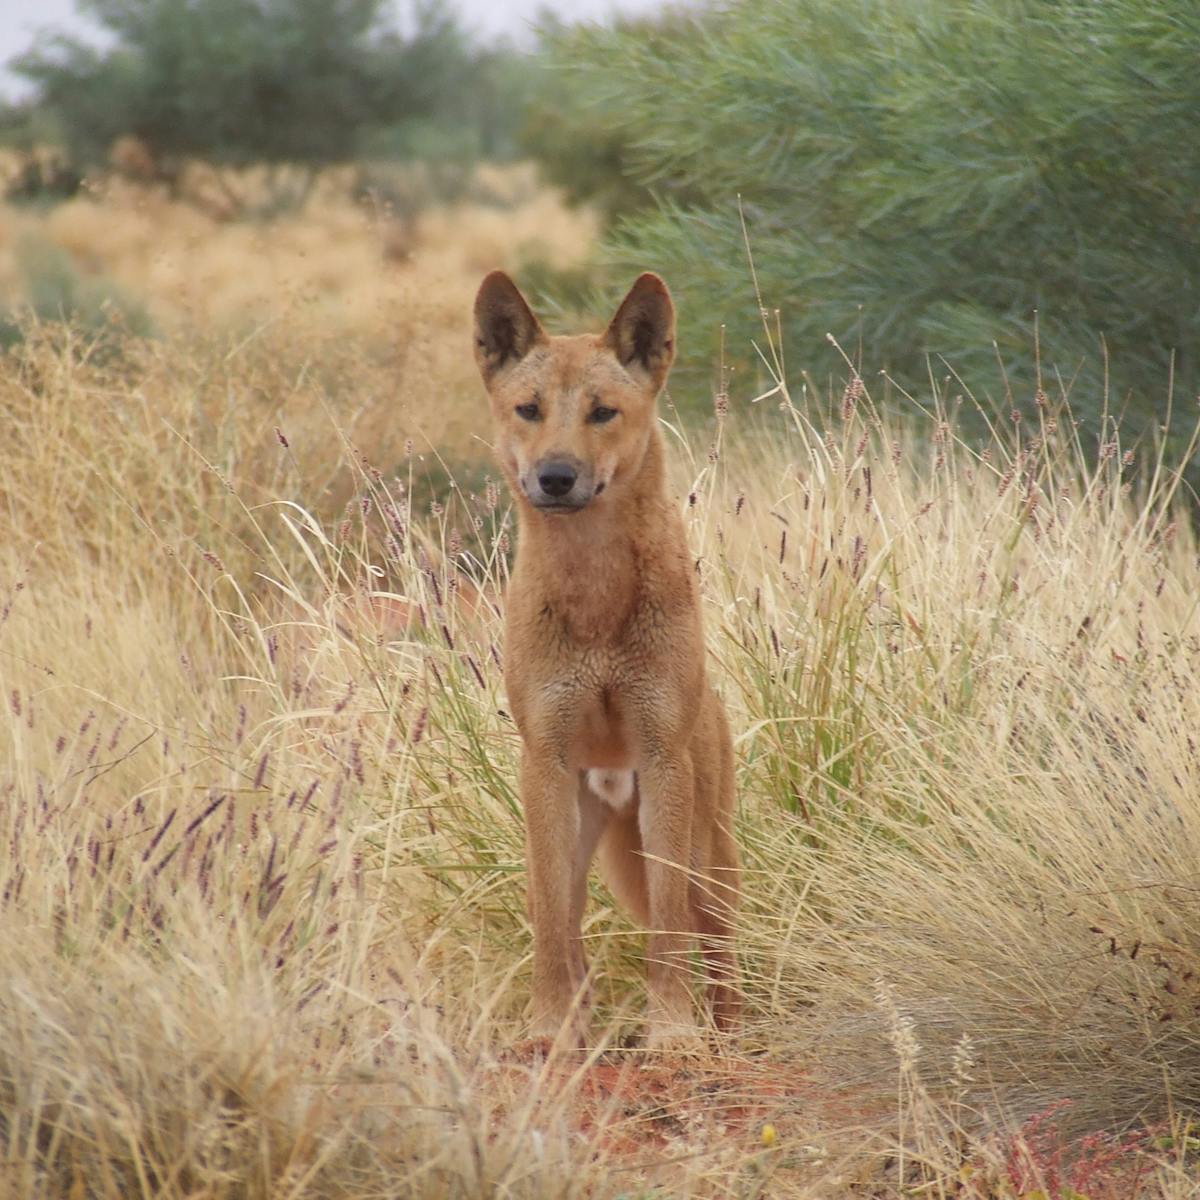 Australia should enlist dingoes to control invasive species